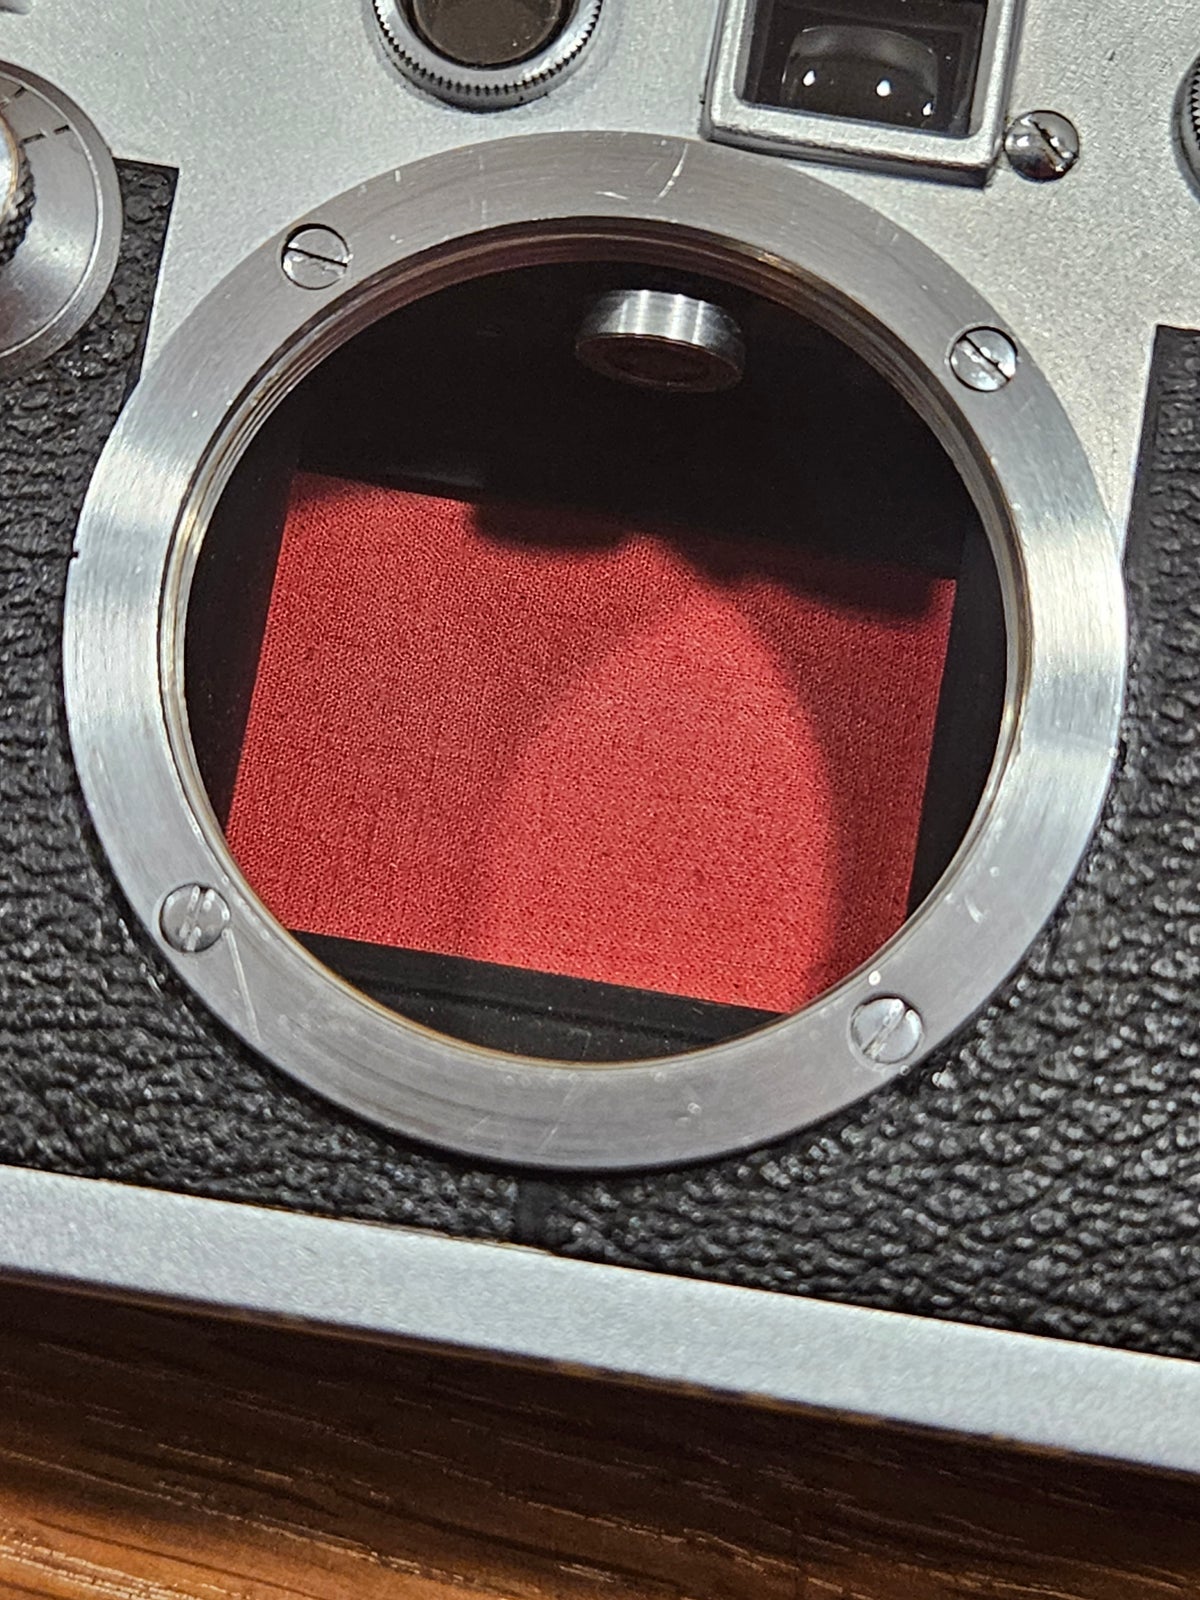 Leica, IIIc red curtain